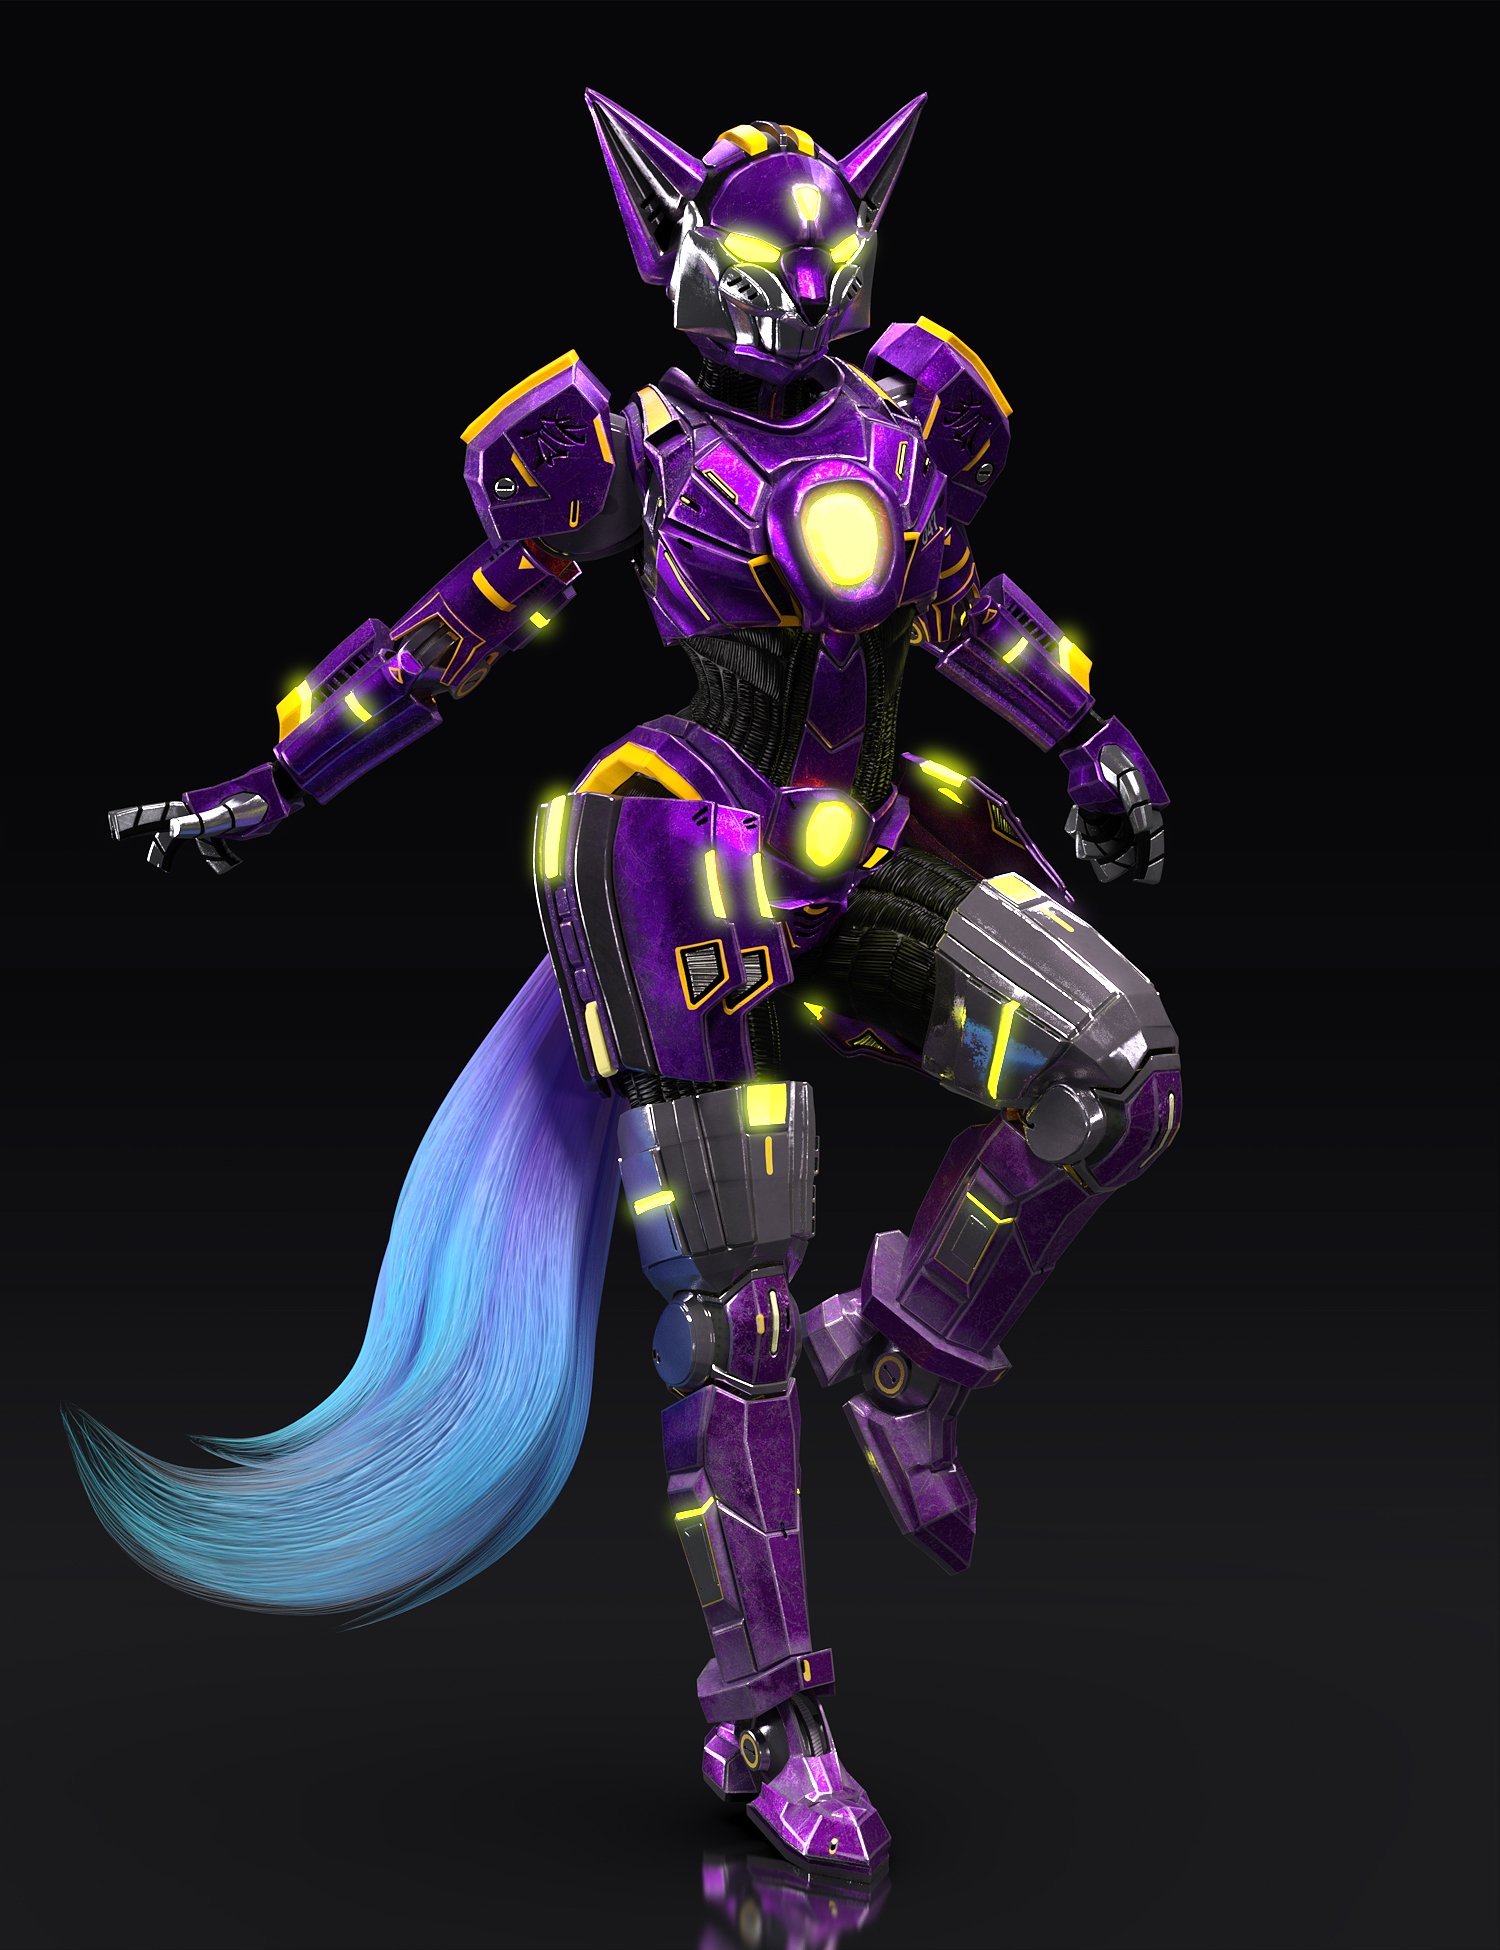 Kitsune Mech Armor for Genesis 8 and 8.1 Females